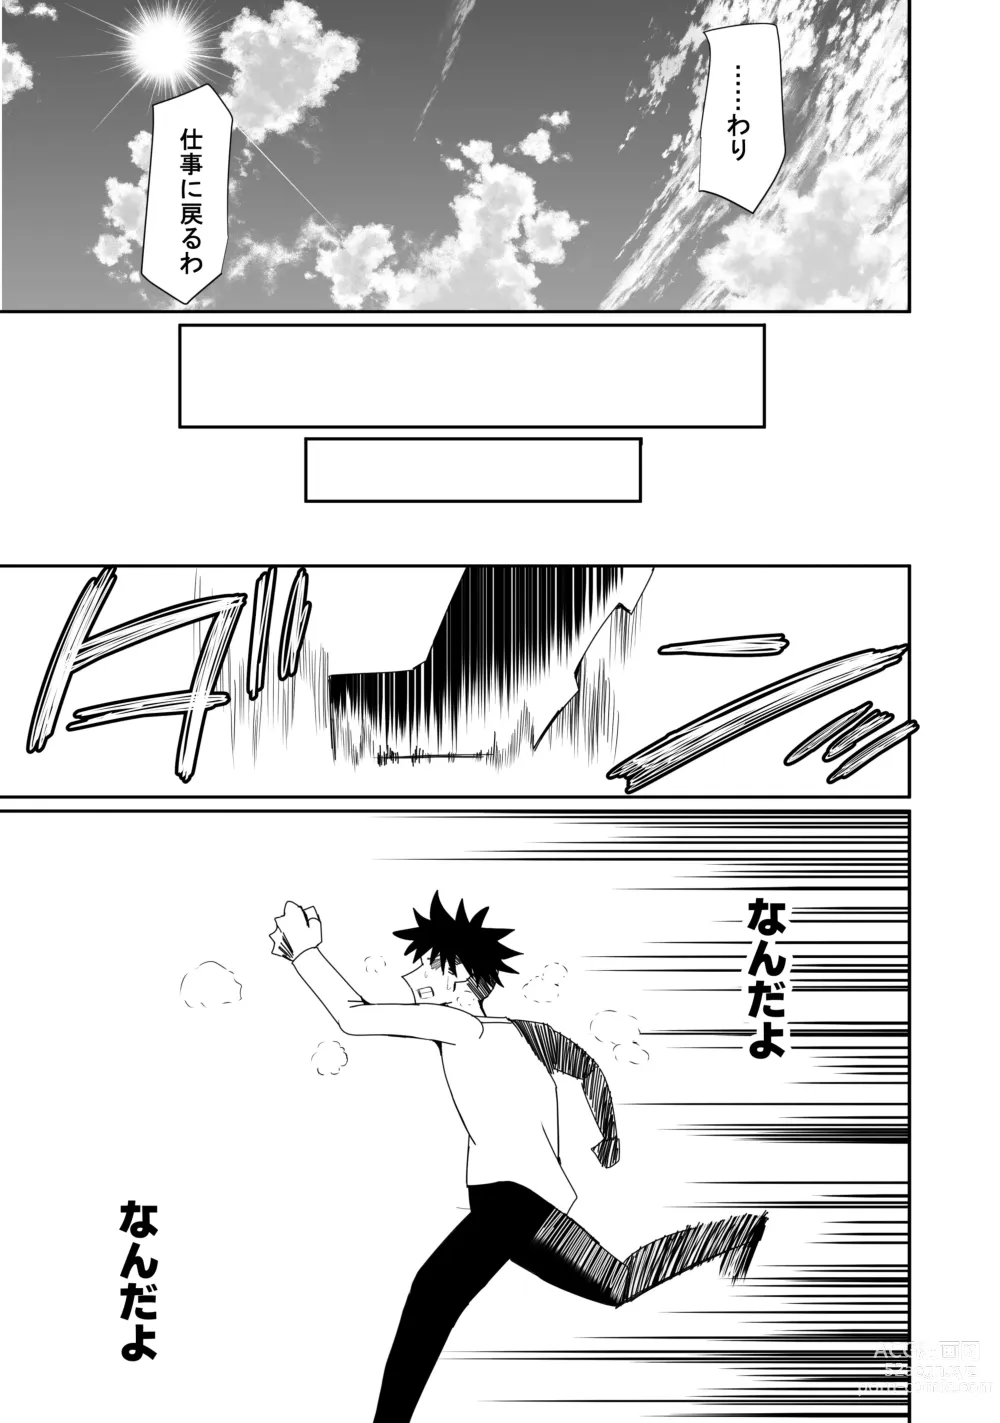 Page 19 of manga Junai Create Tokuten Manga